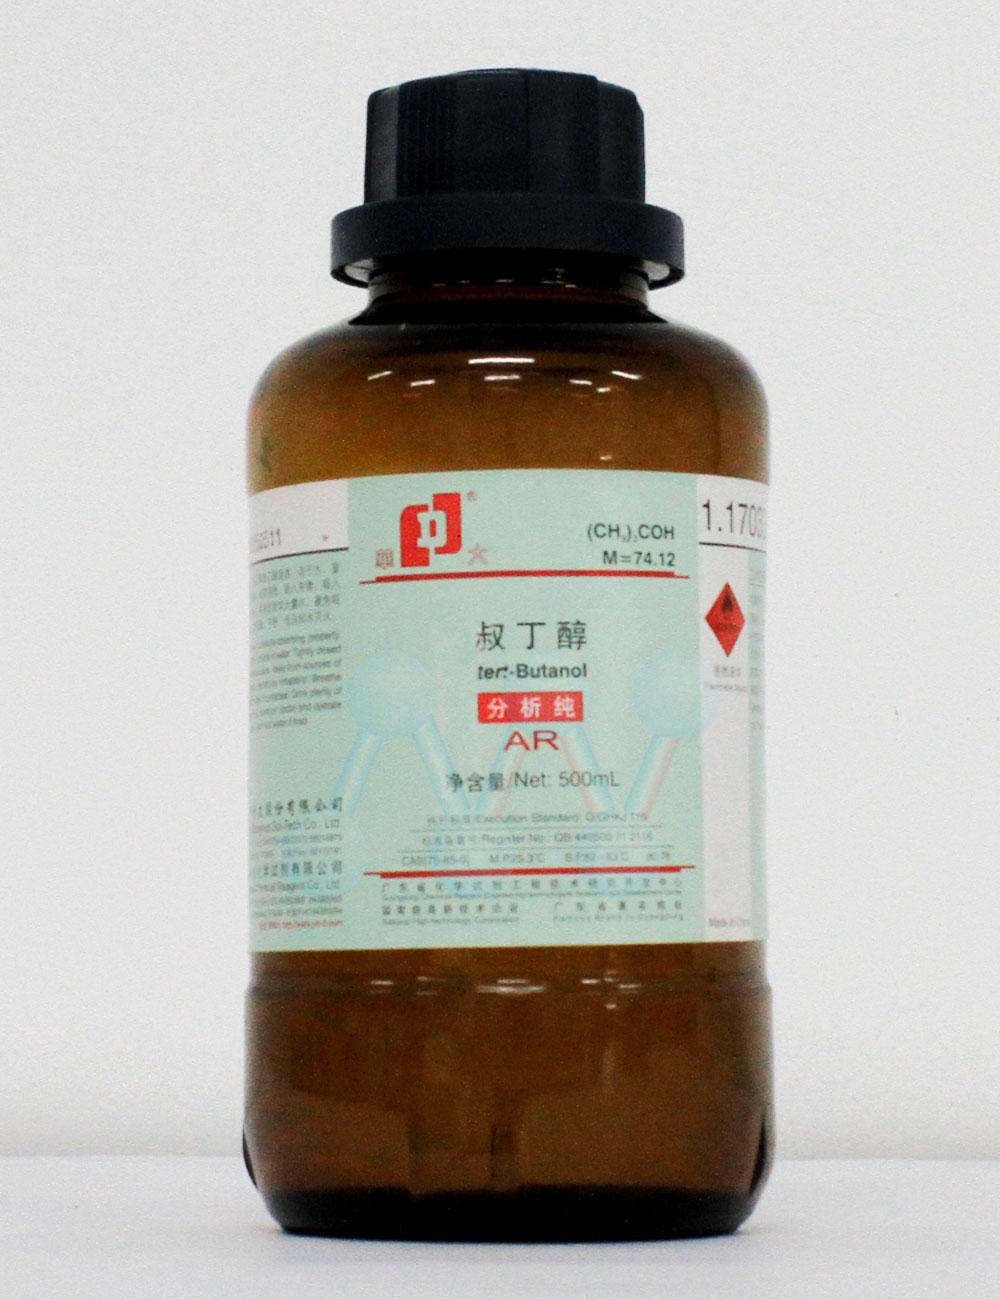 Tert Butanol (Trimethyl Carbinol) (CH3)3COH